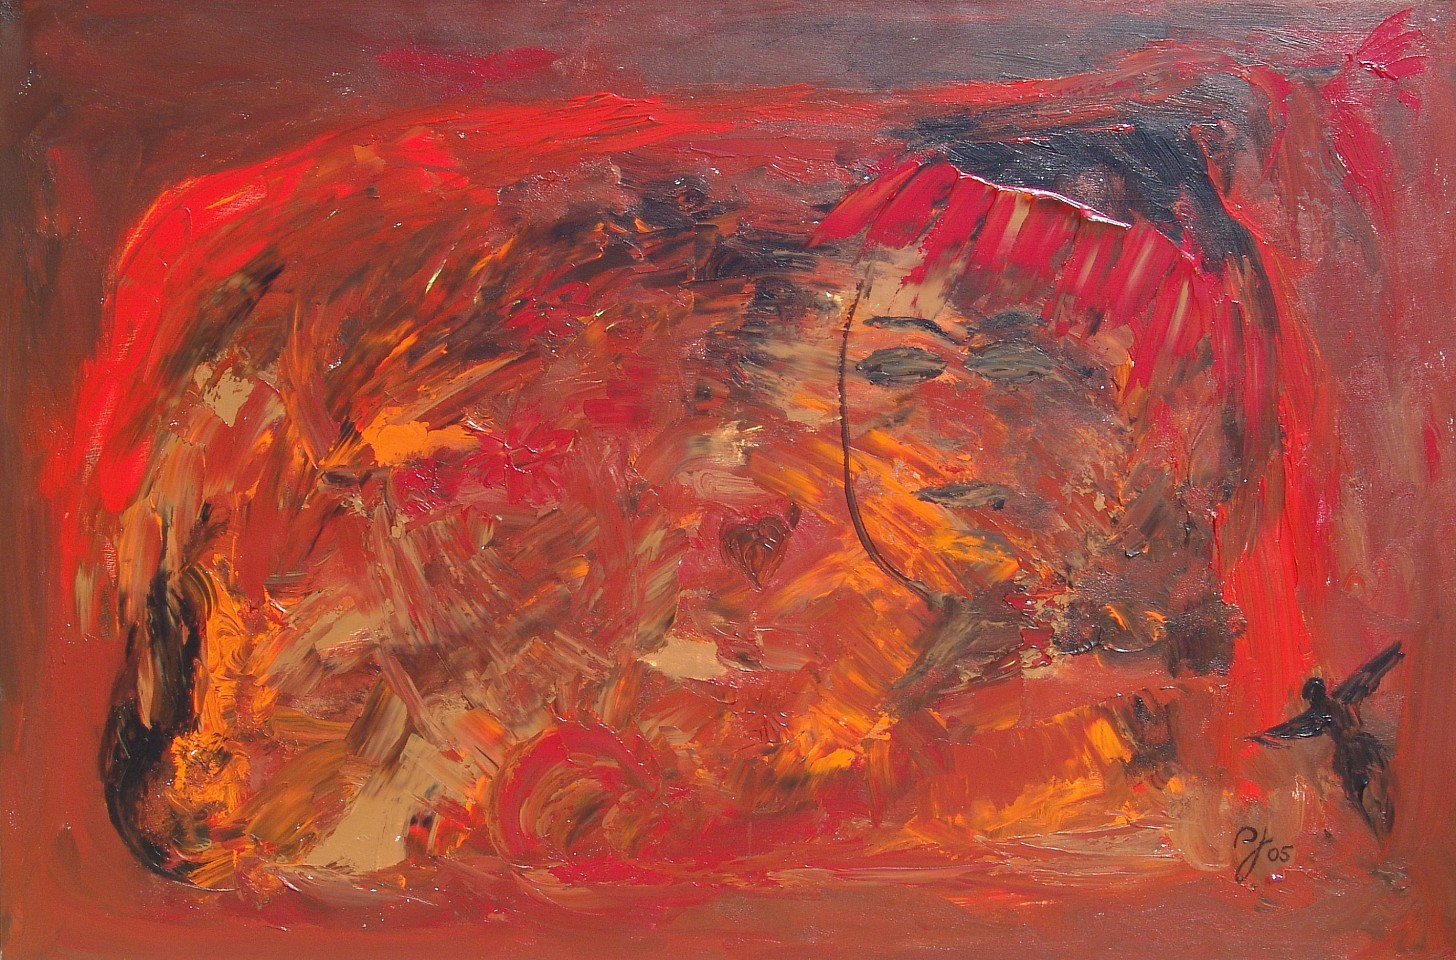 Diego Jacobson, Tribal Initiation, 2005
Acrylic on Canvas, 48 x 72 in. (121.9 x 182.9 cm)
0670